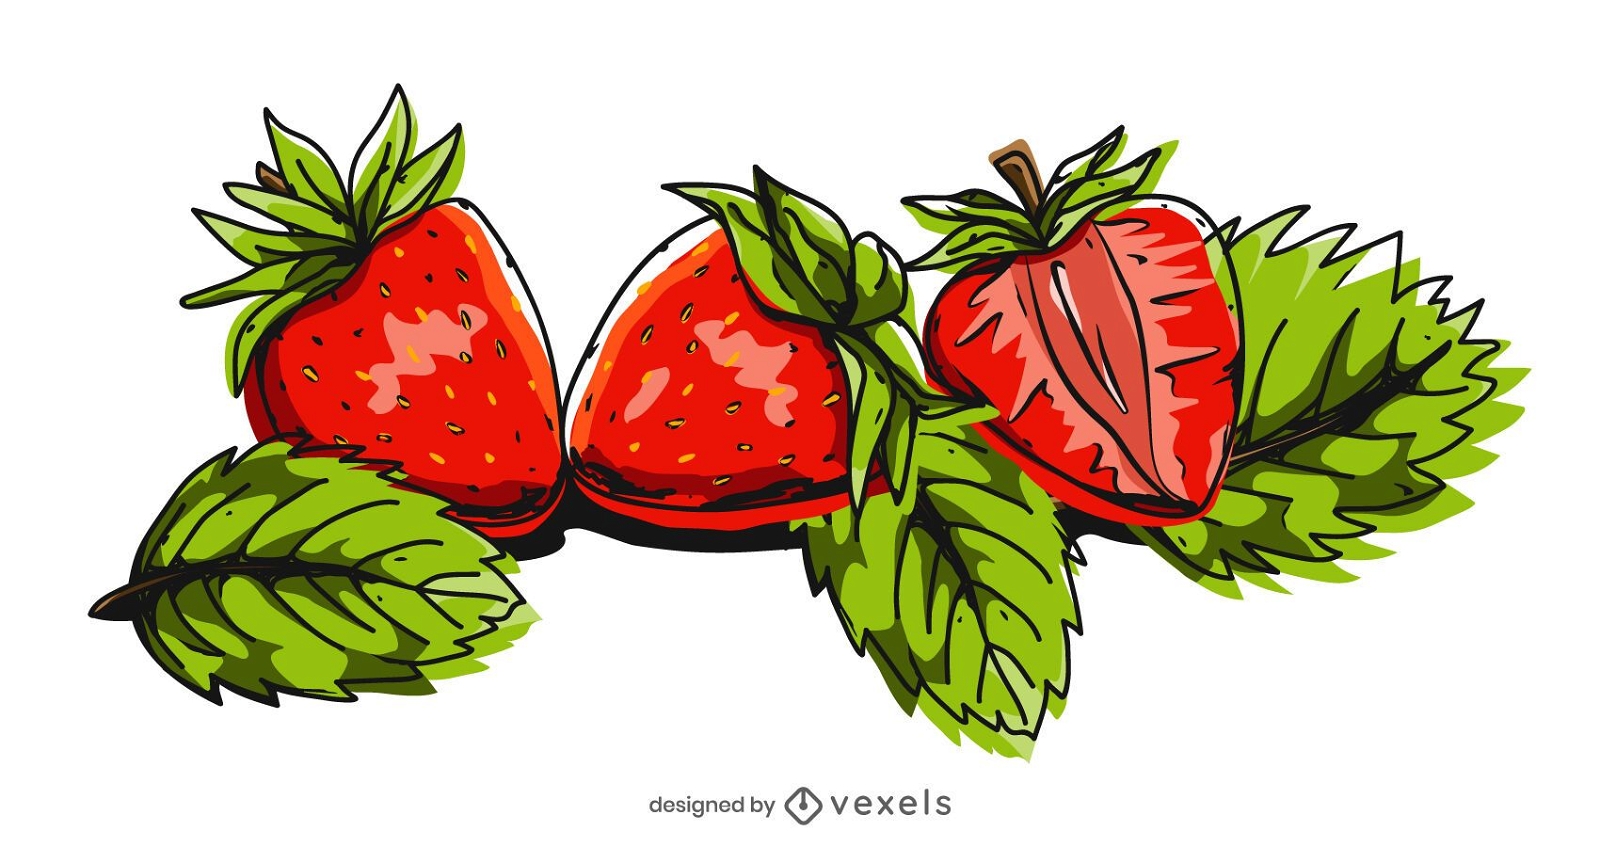 Erdbeer-Illustrations-Design-Set